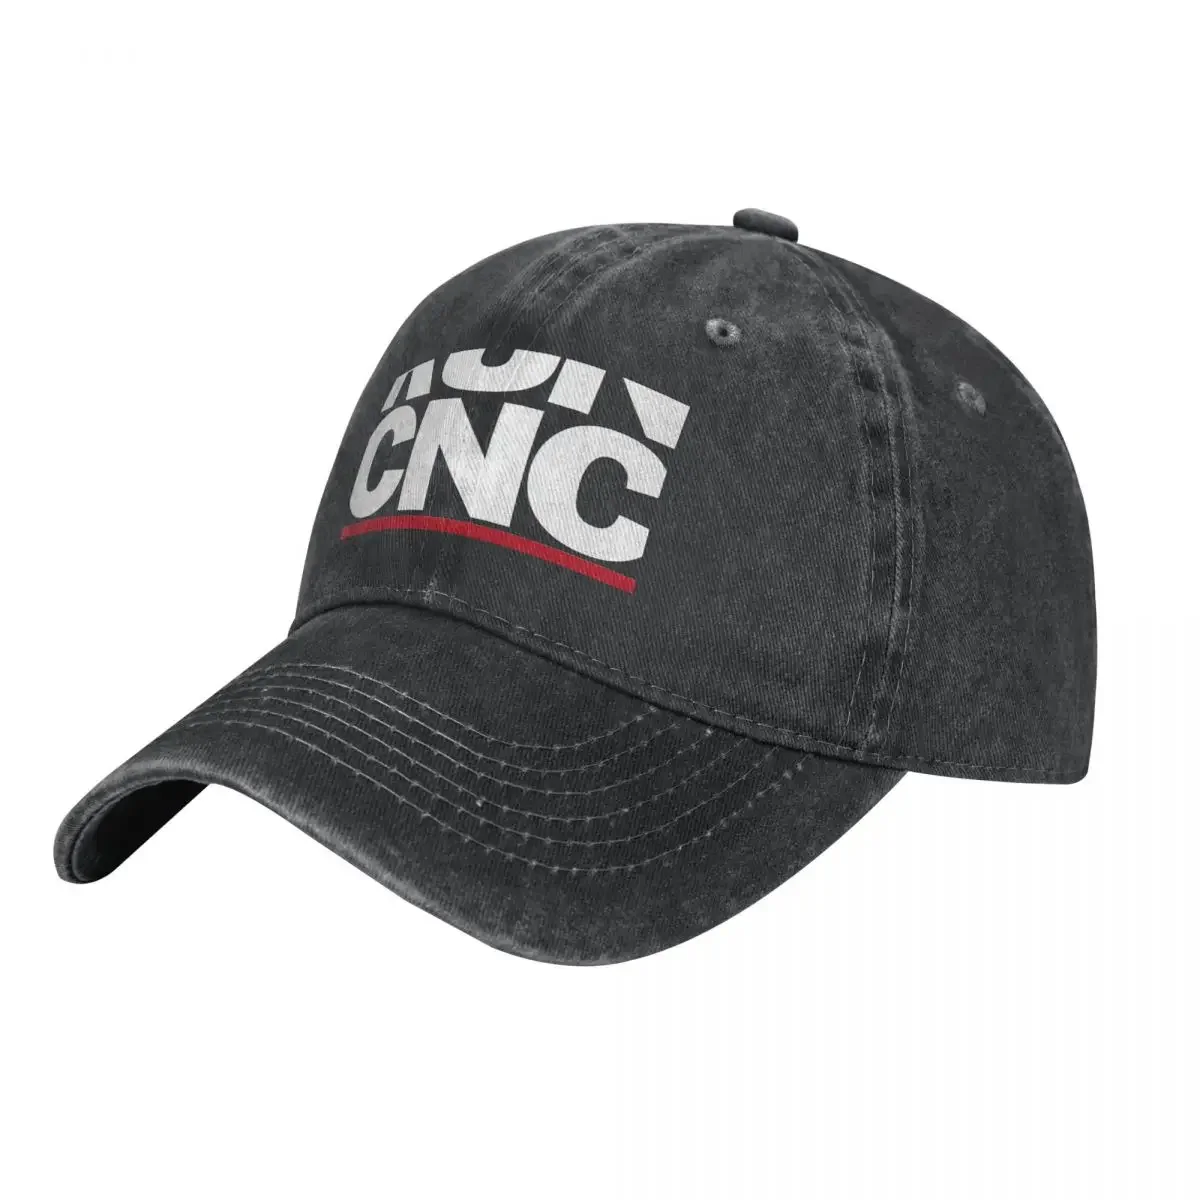 RUN CNC Cowboy Hat Trucker Hat Hat Man Luxury Mens Tennis Women's